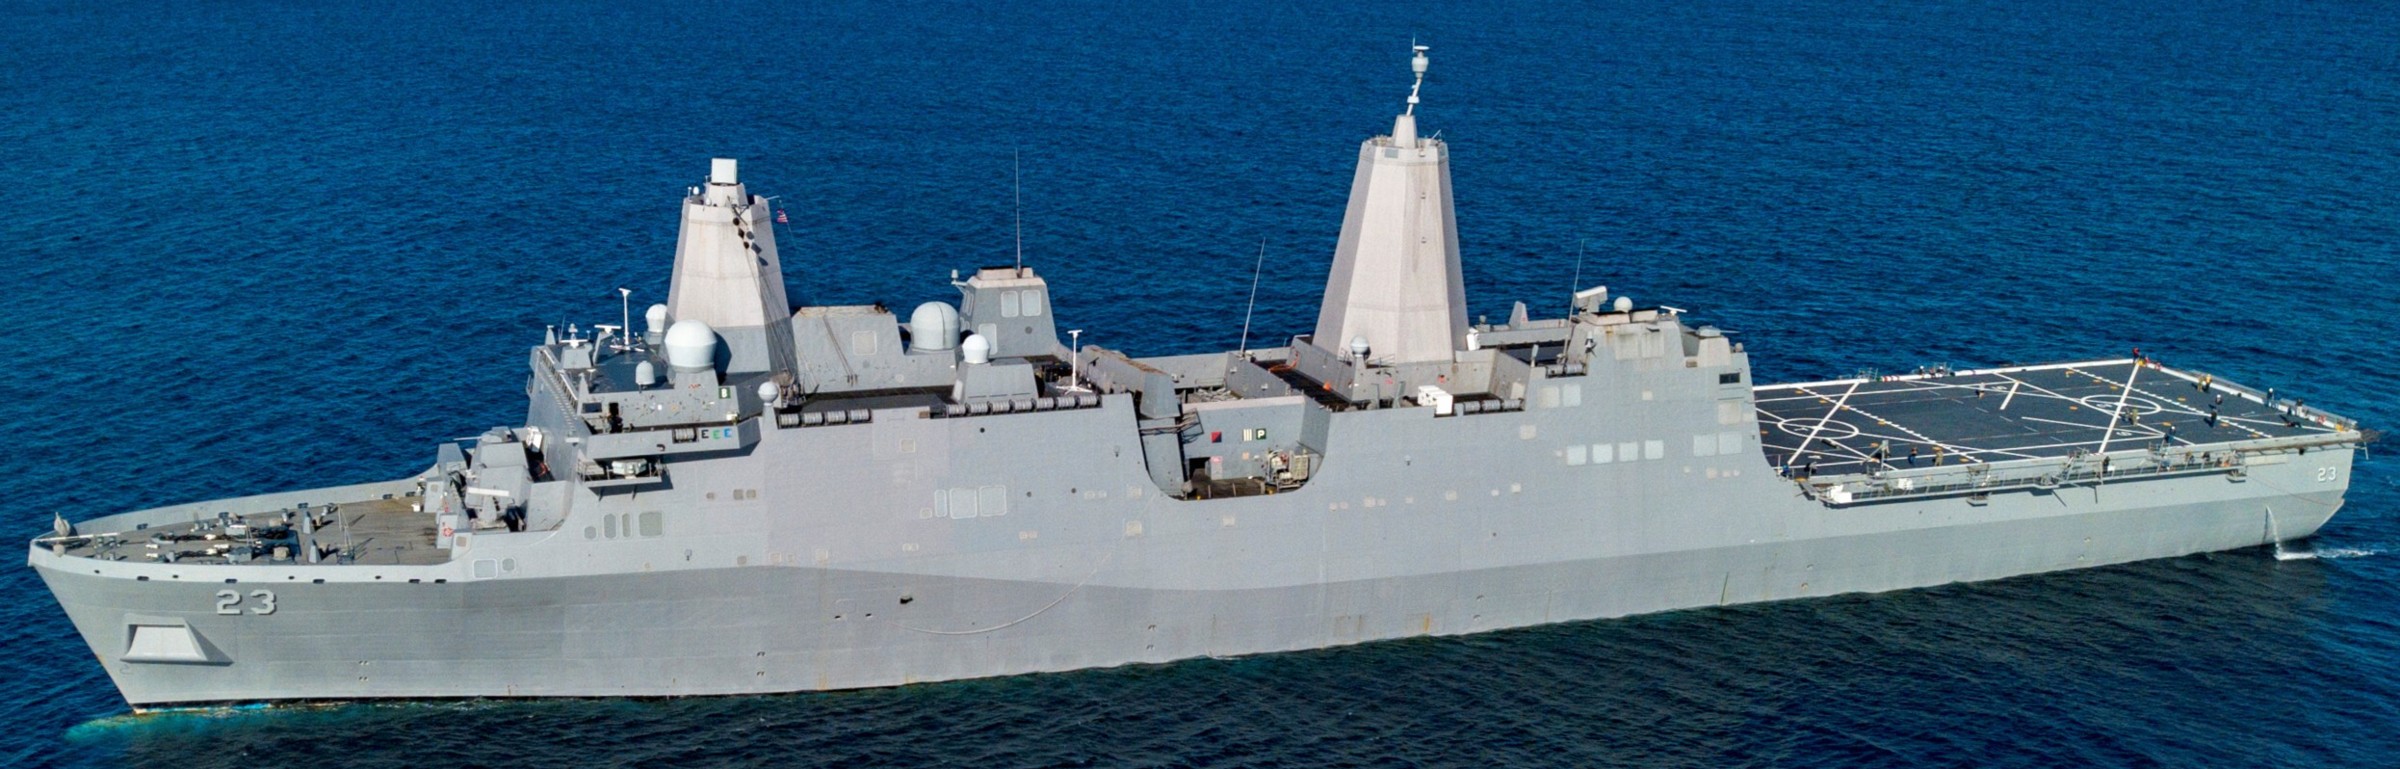 lpd-23 uss anchorage san antonio class amphibious transport dock landing ship us navy pacific ocean 16